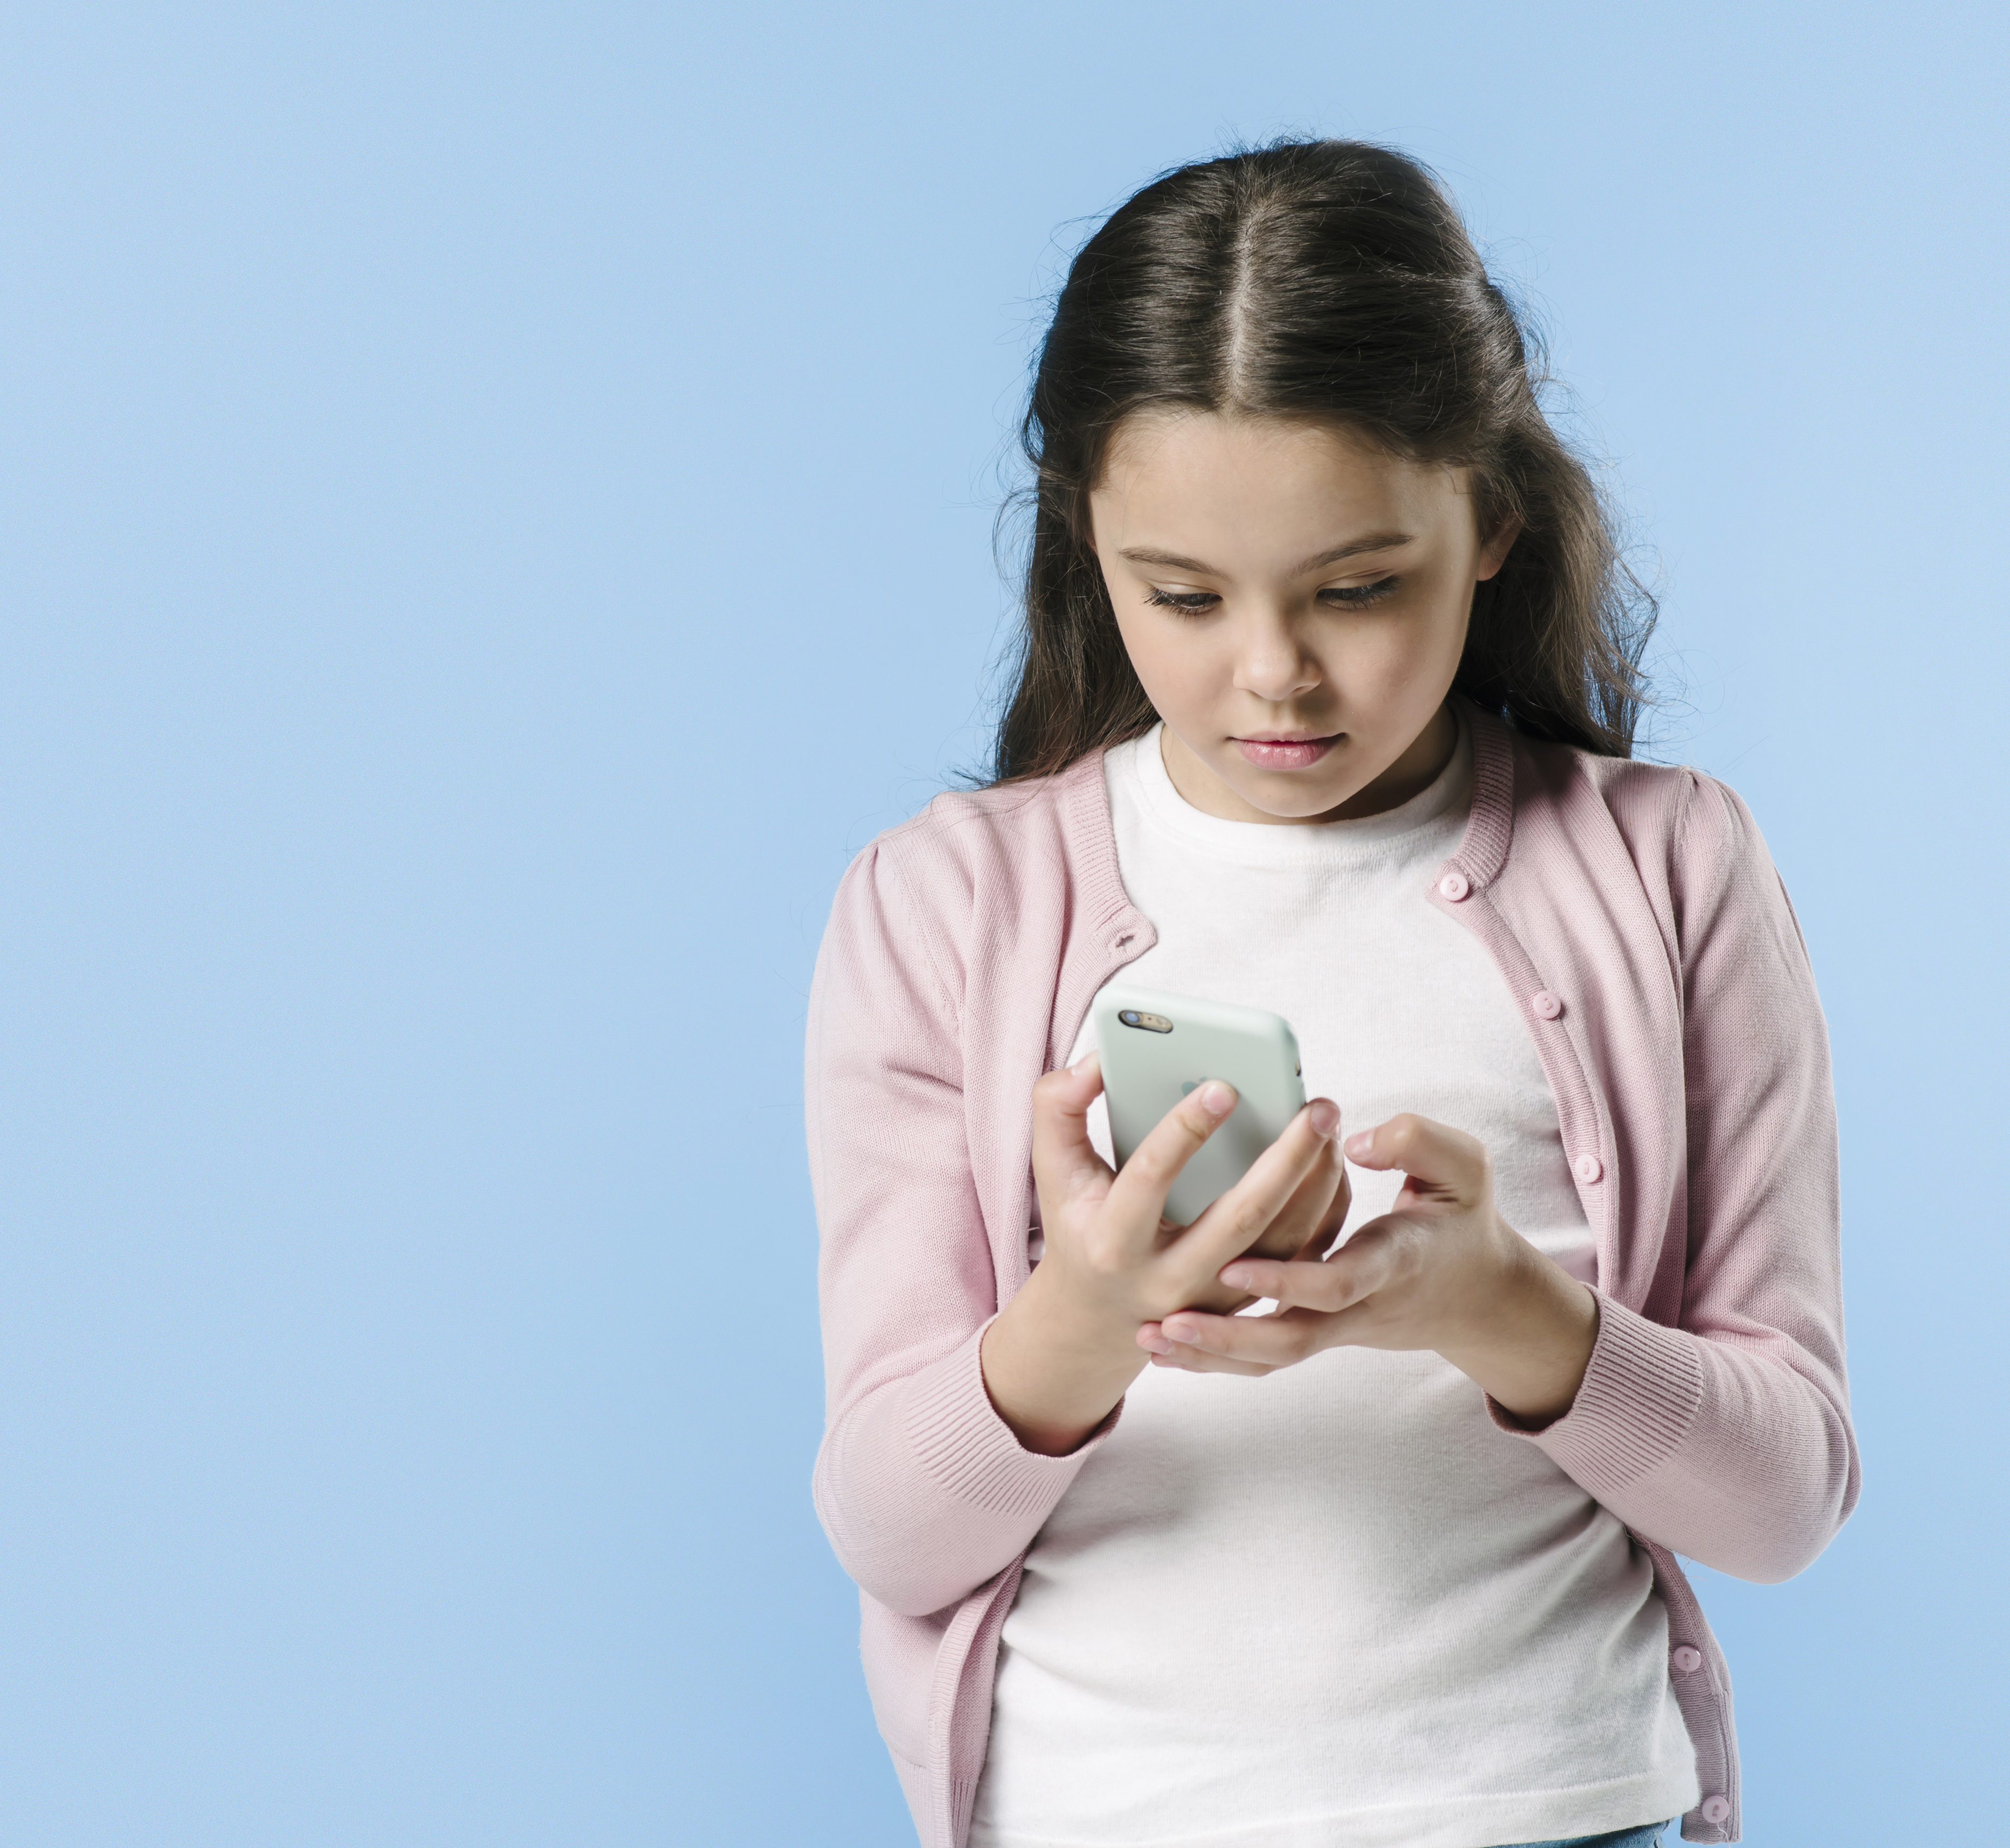 Кибербуллинг: как себя вести, если ребёнка оскорбляют в интернете?